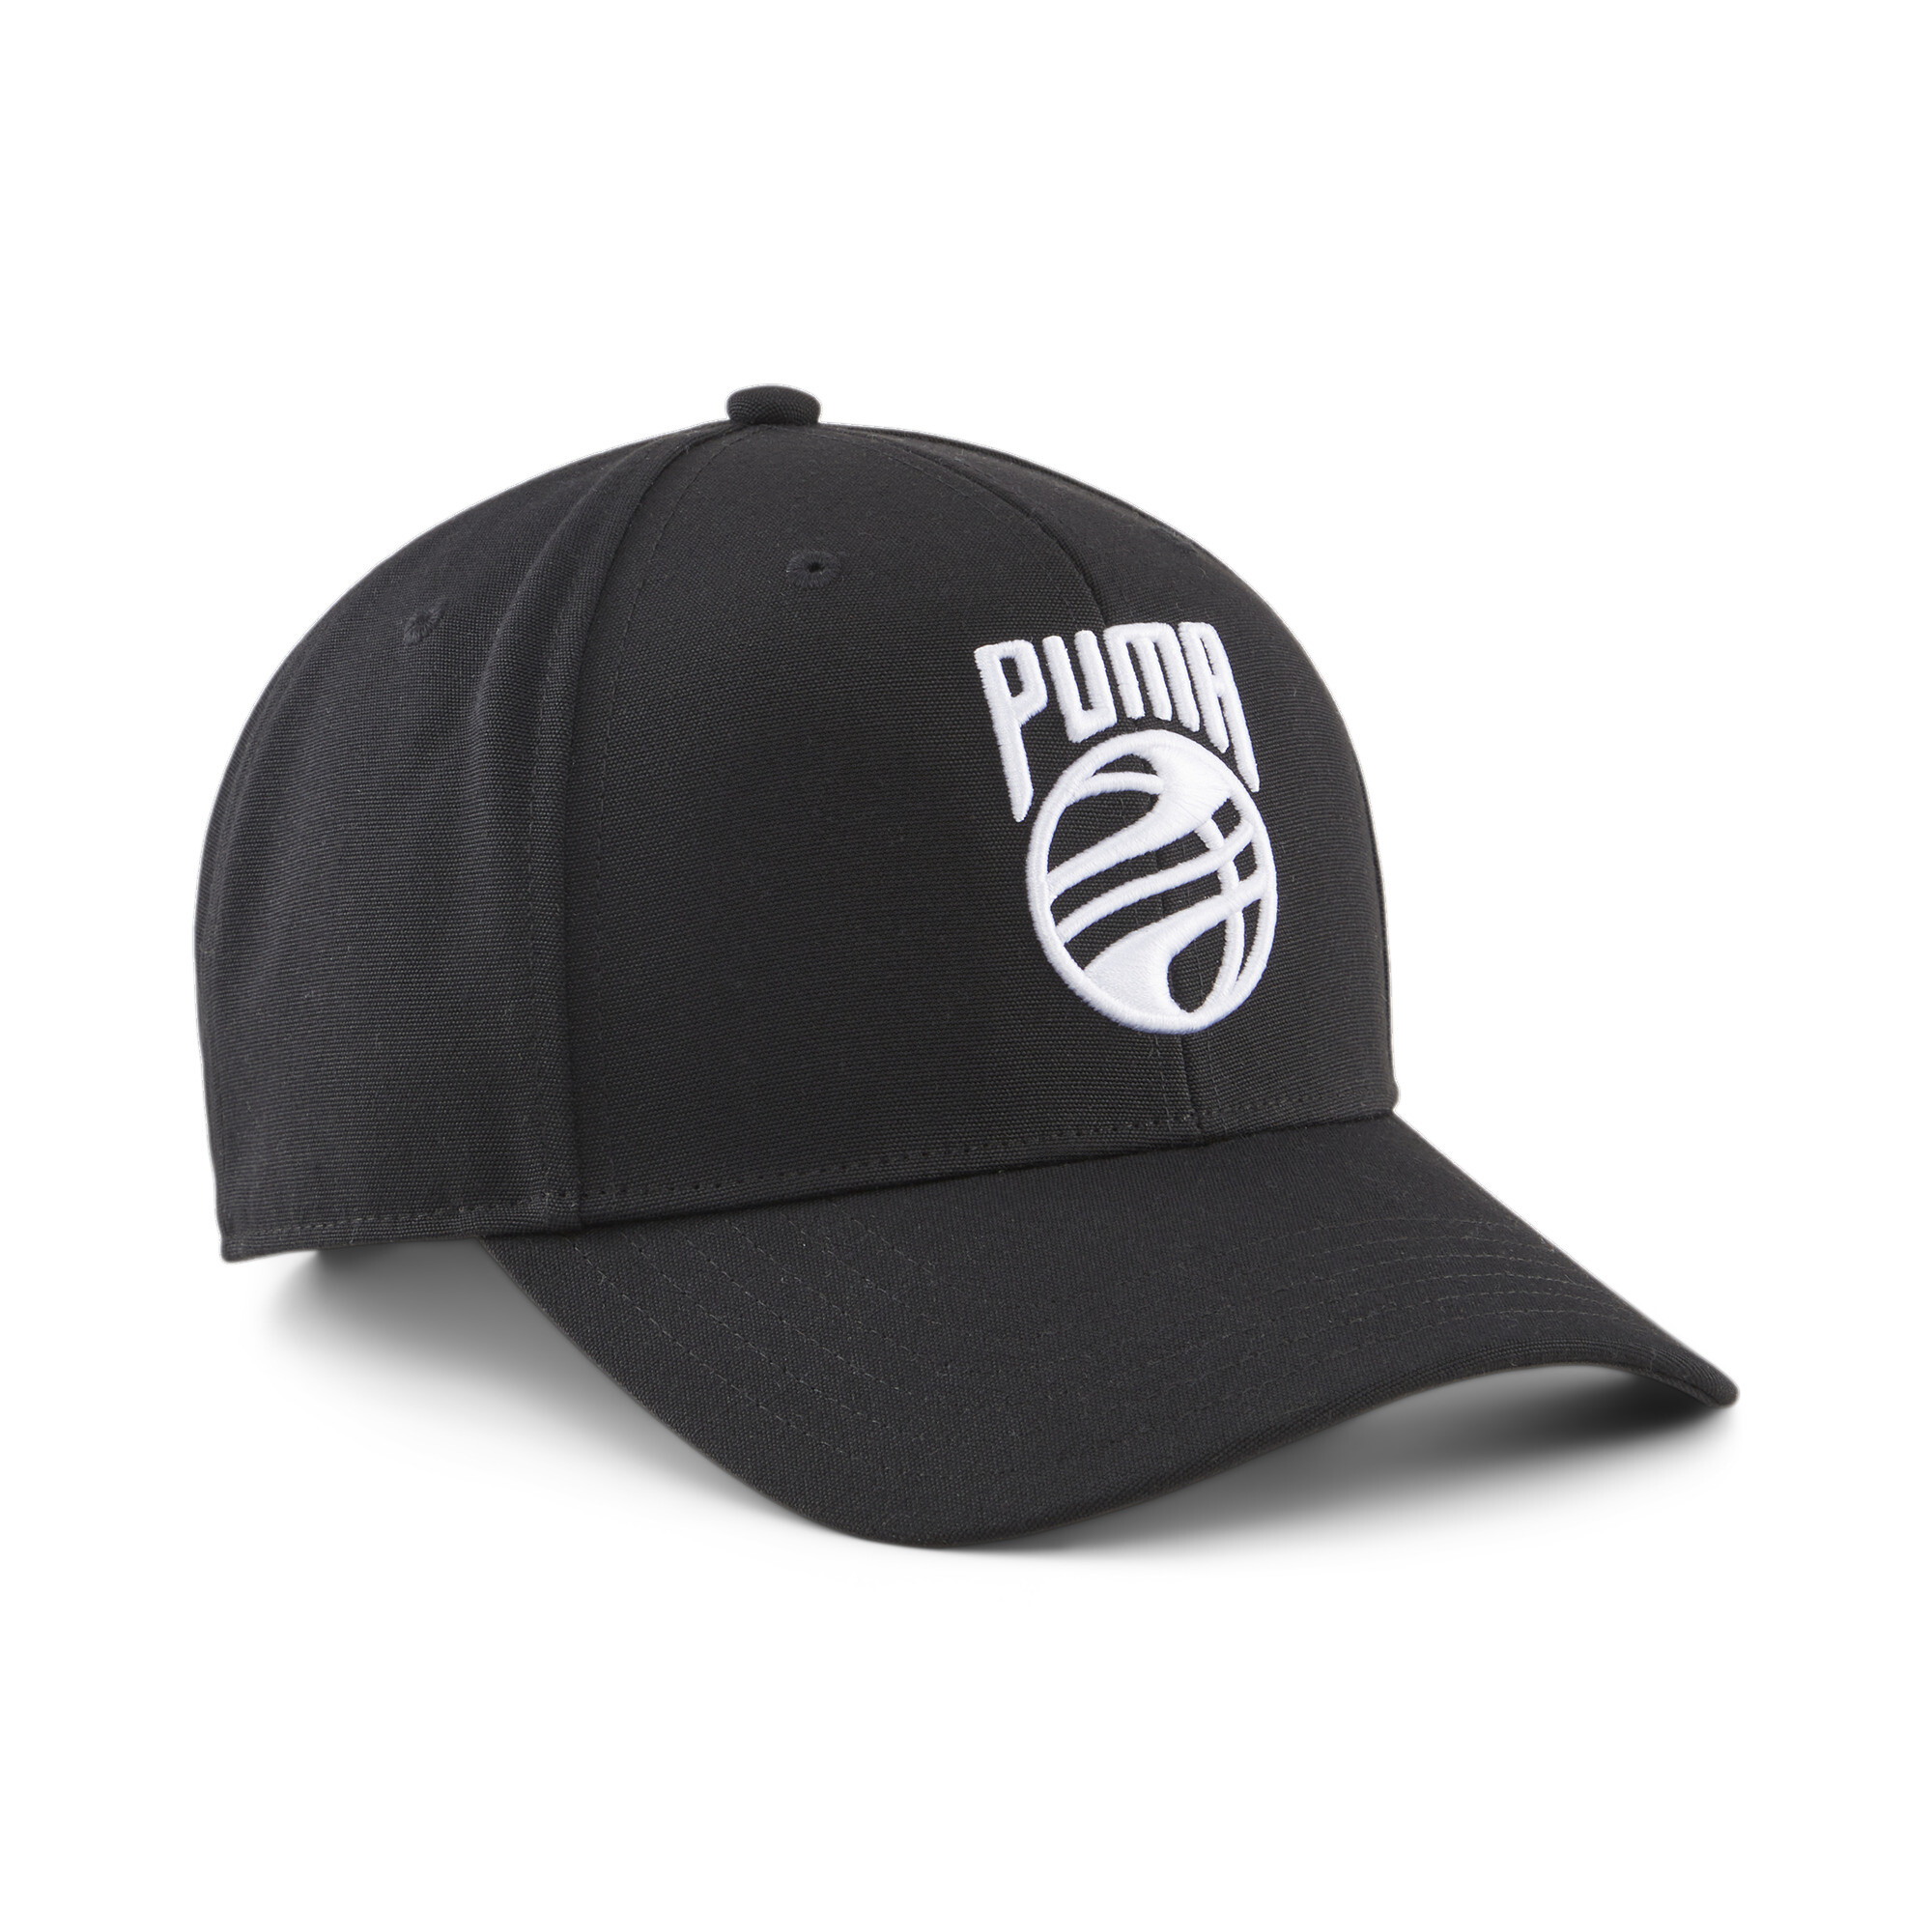 Puma Pro Basketball Cap, Black, Size Adult, Accessories